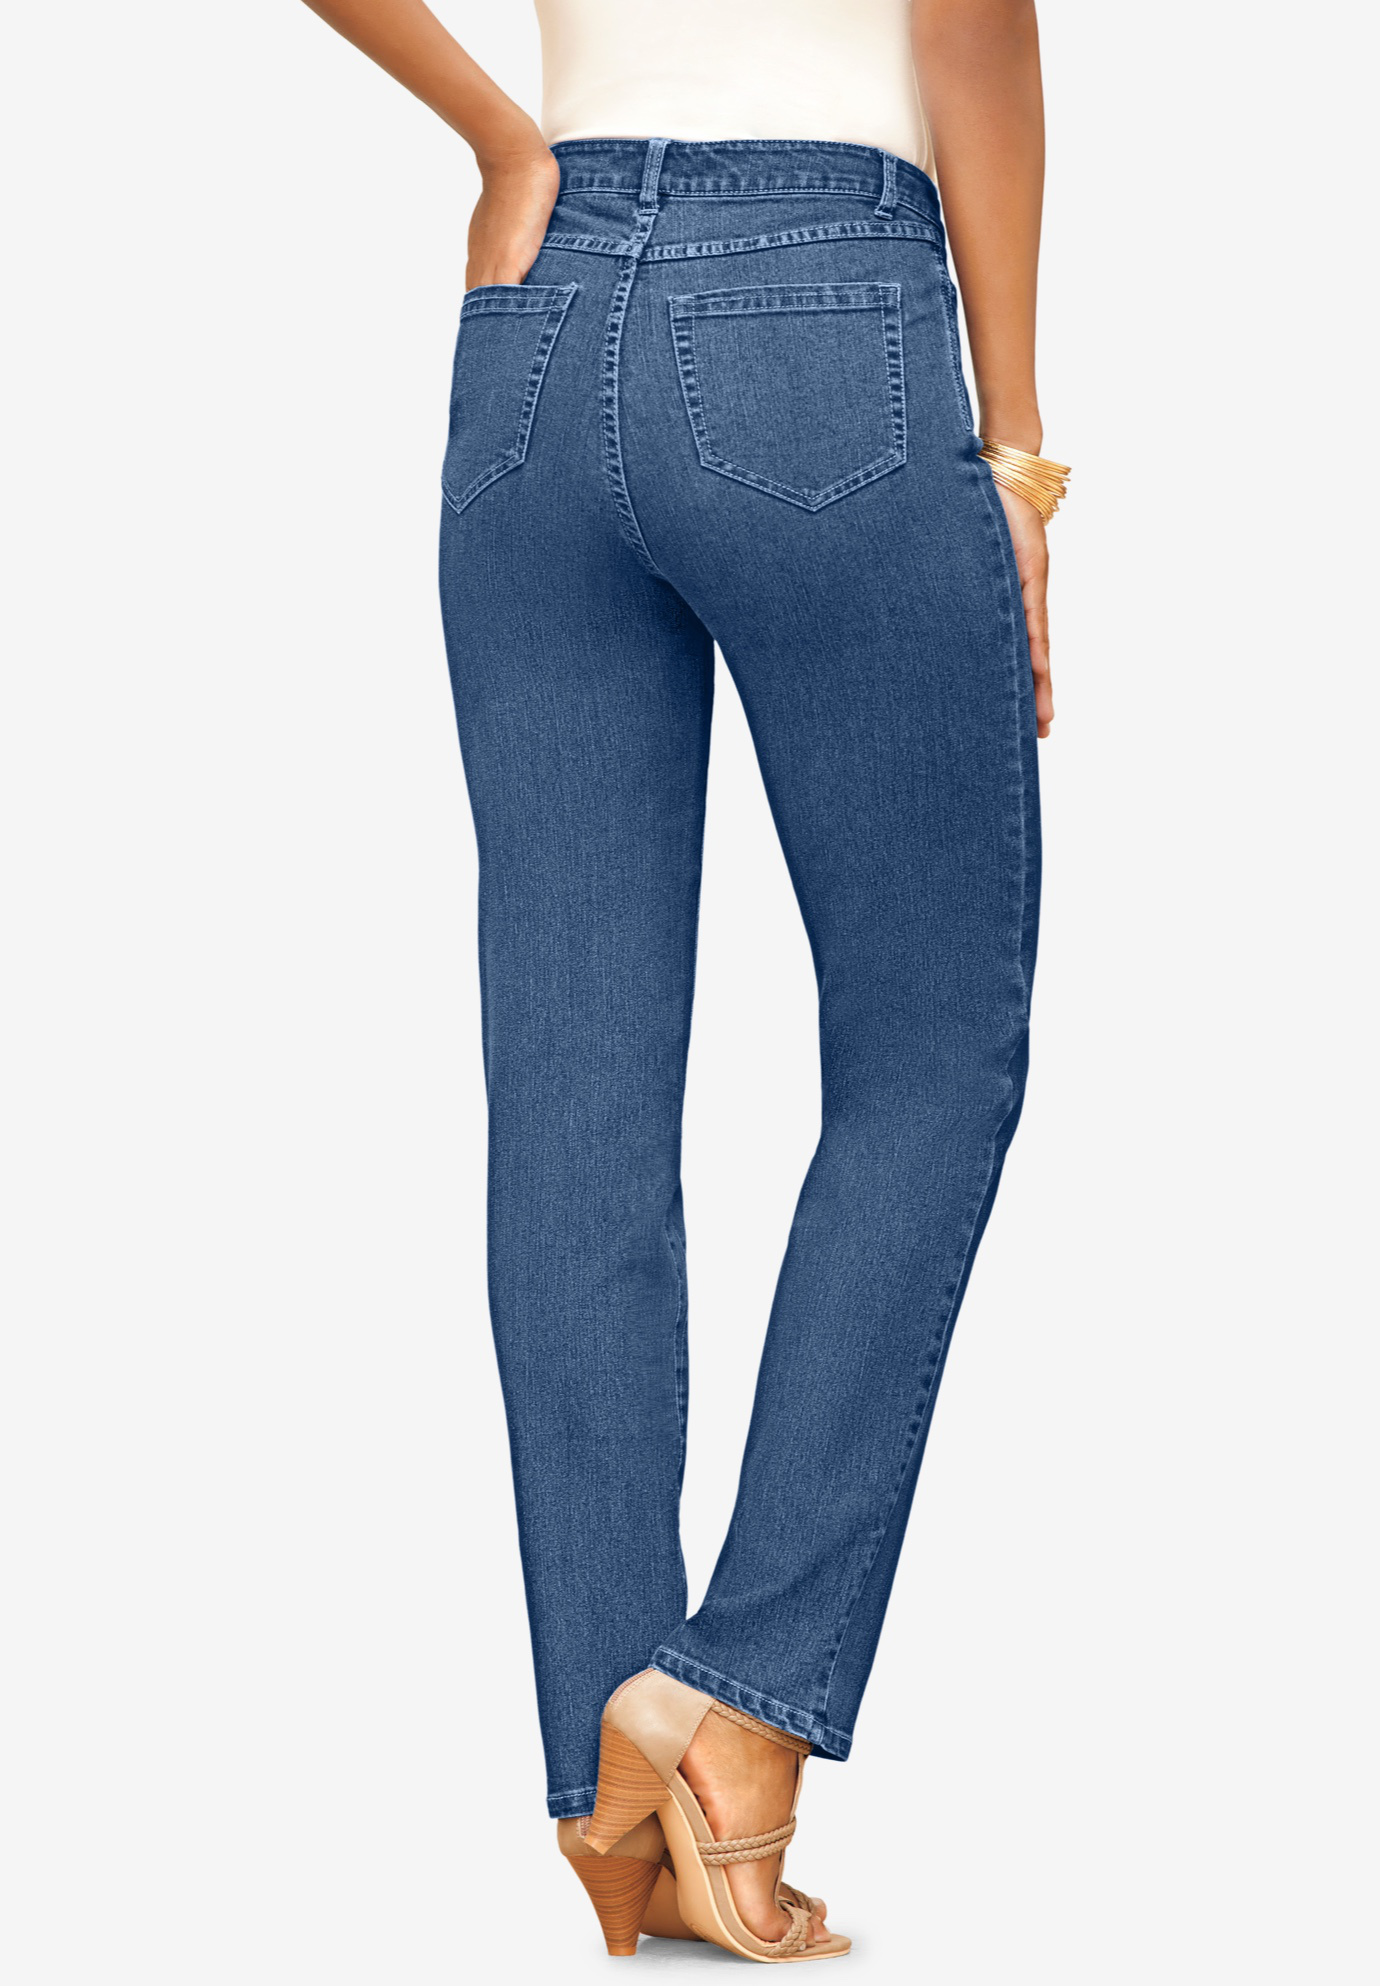 Kymaro jeans Women 24 blue Curve Control Jeans stretch Denim straight leg  Ladies